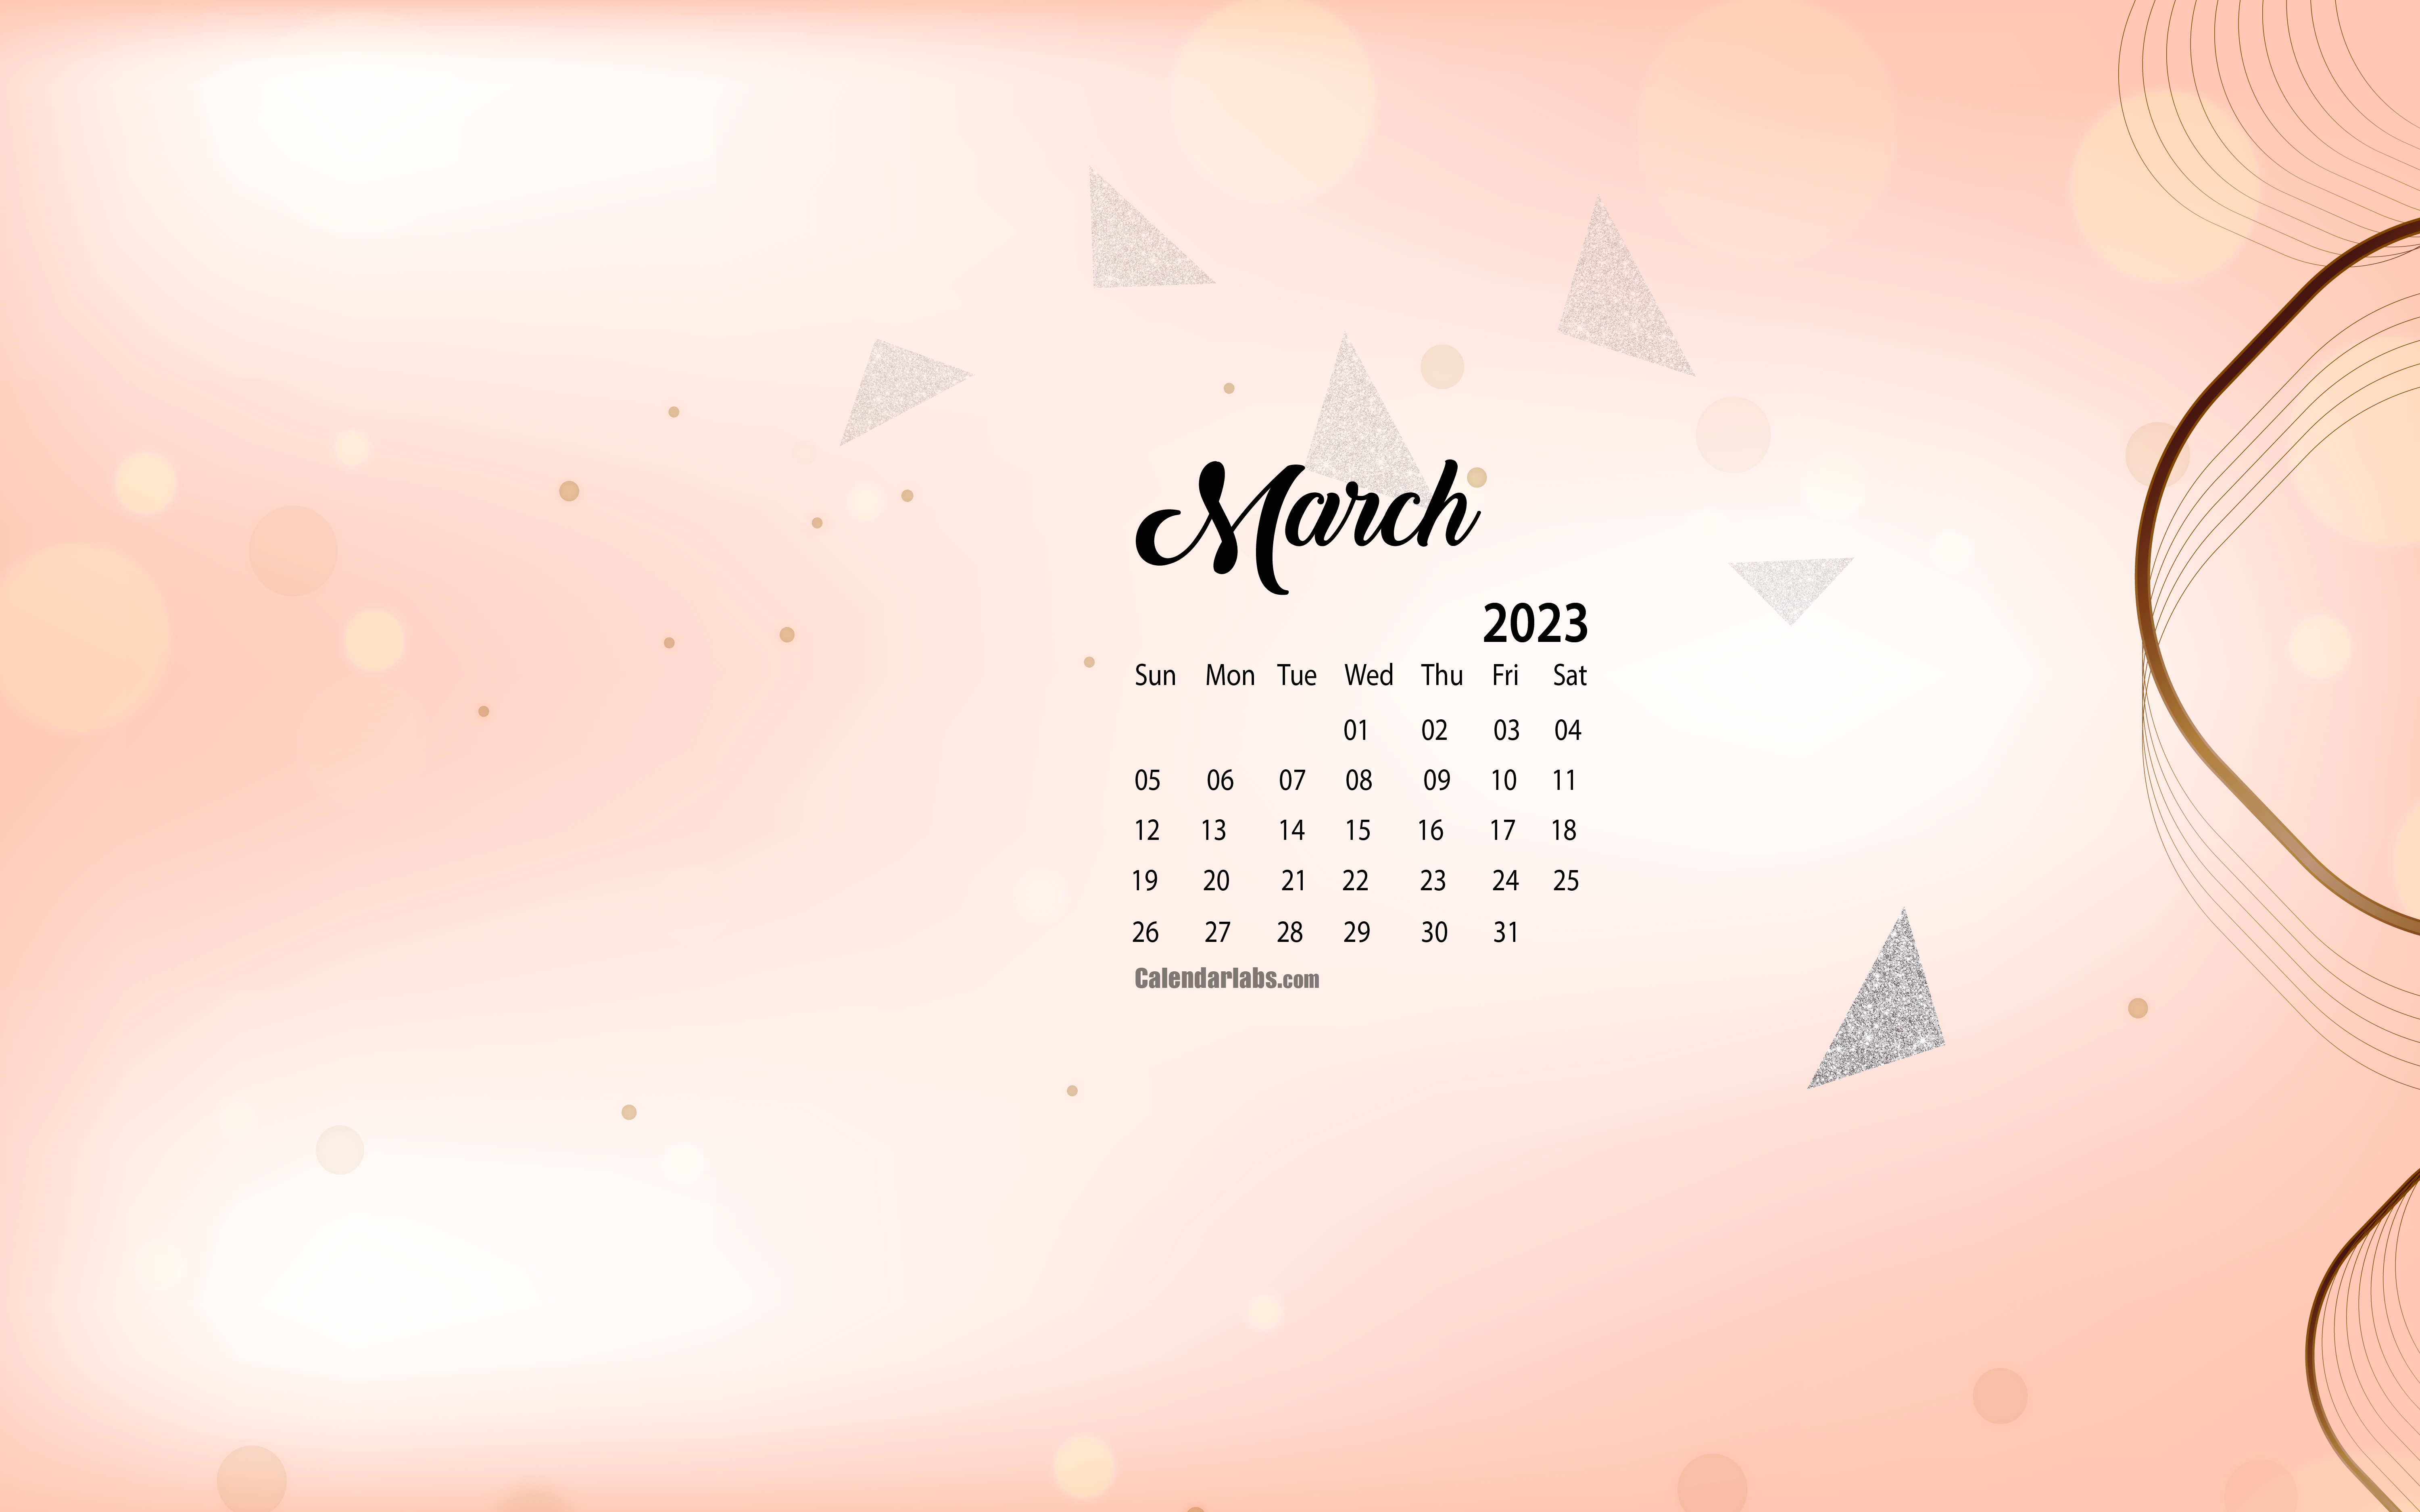 March 2018 free wallpaper calendar for desktop background